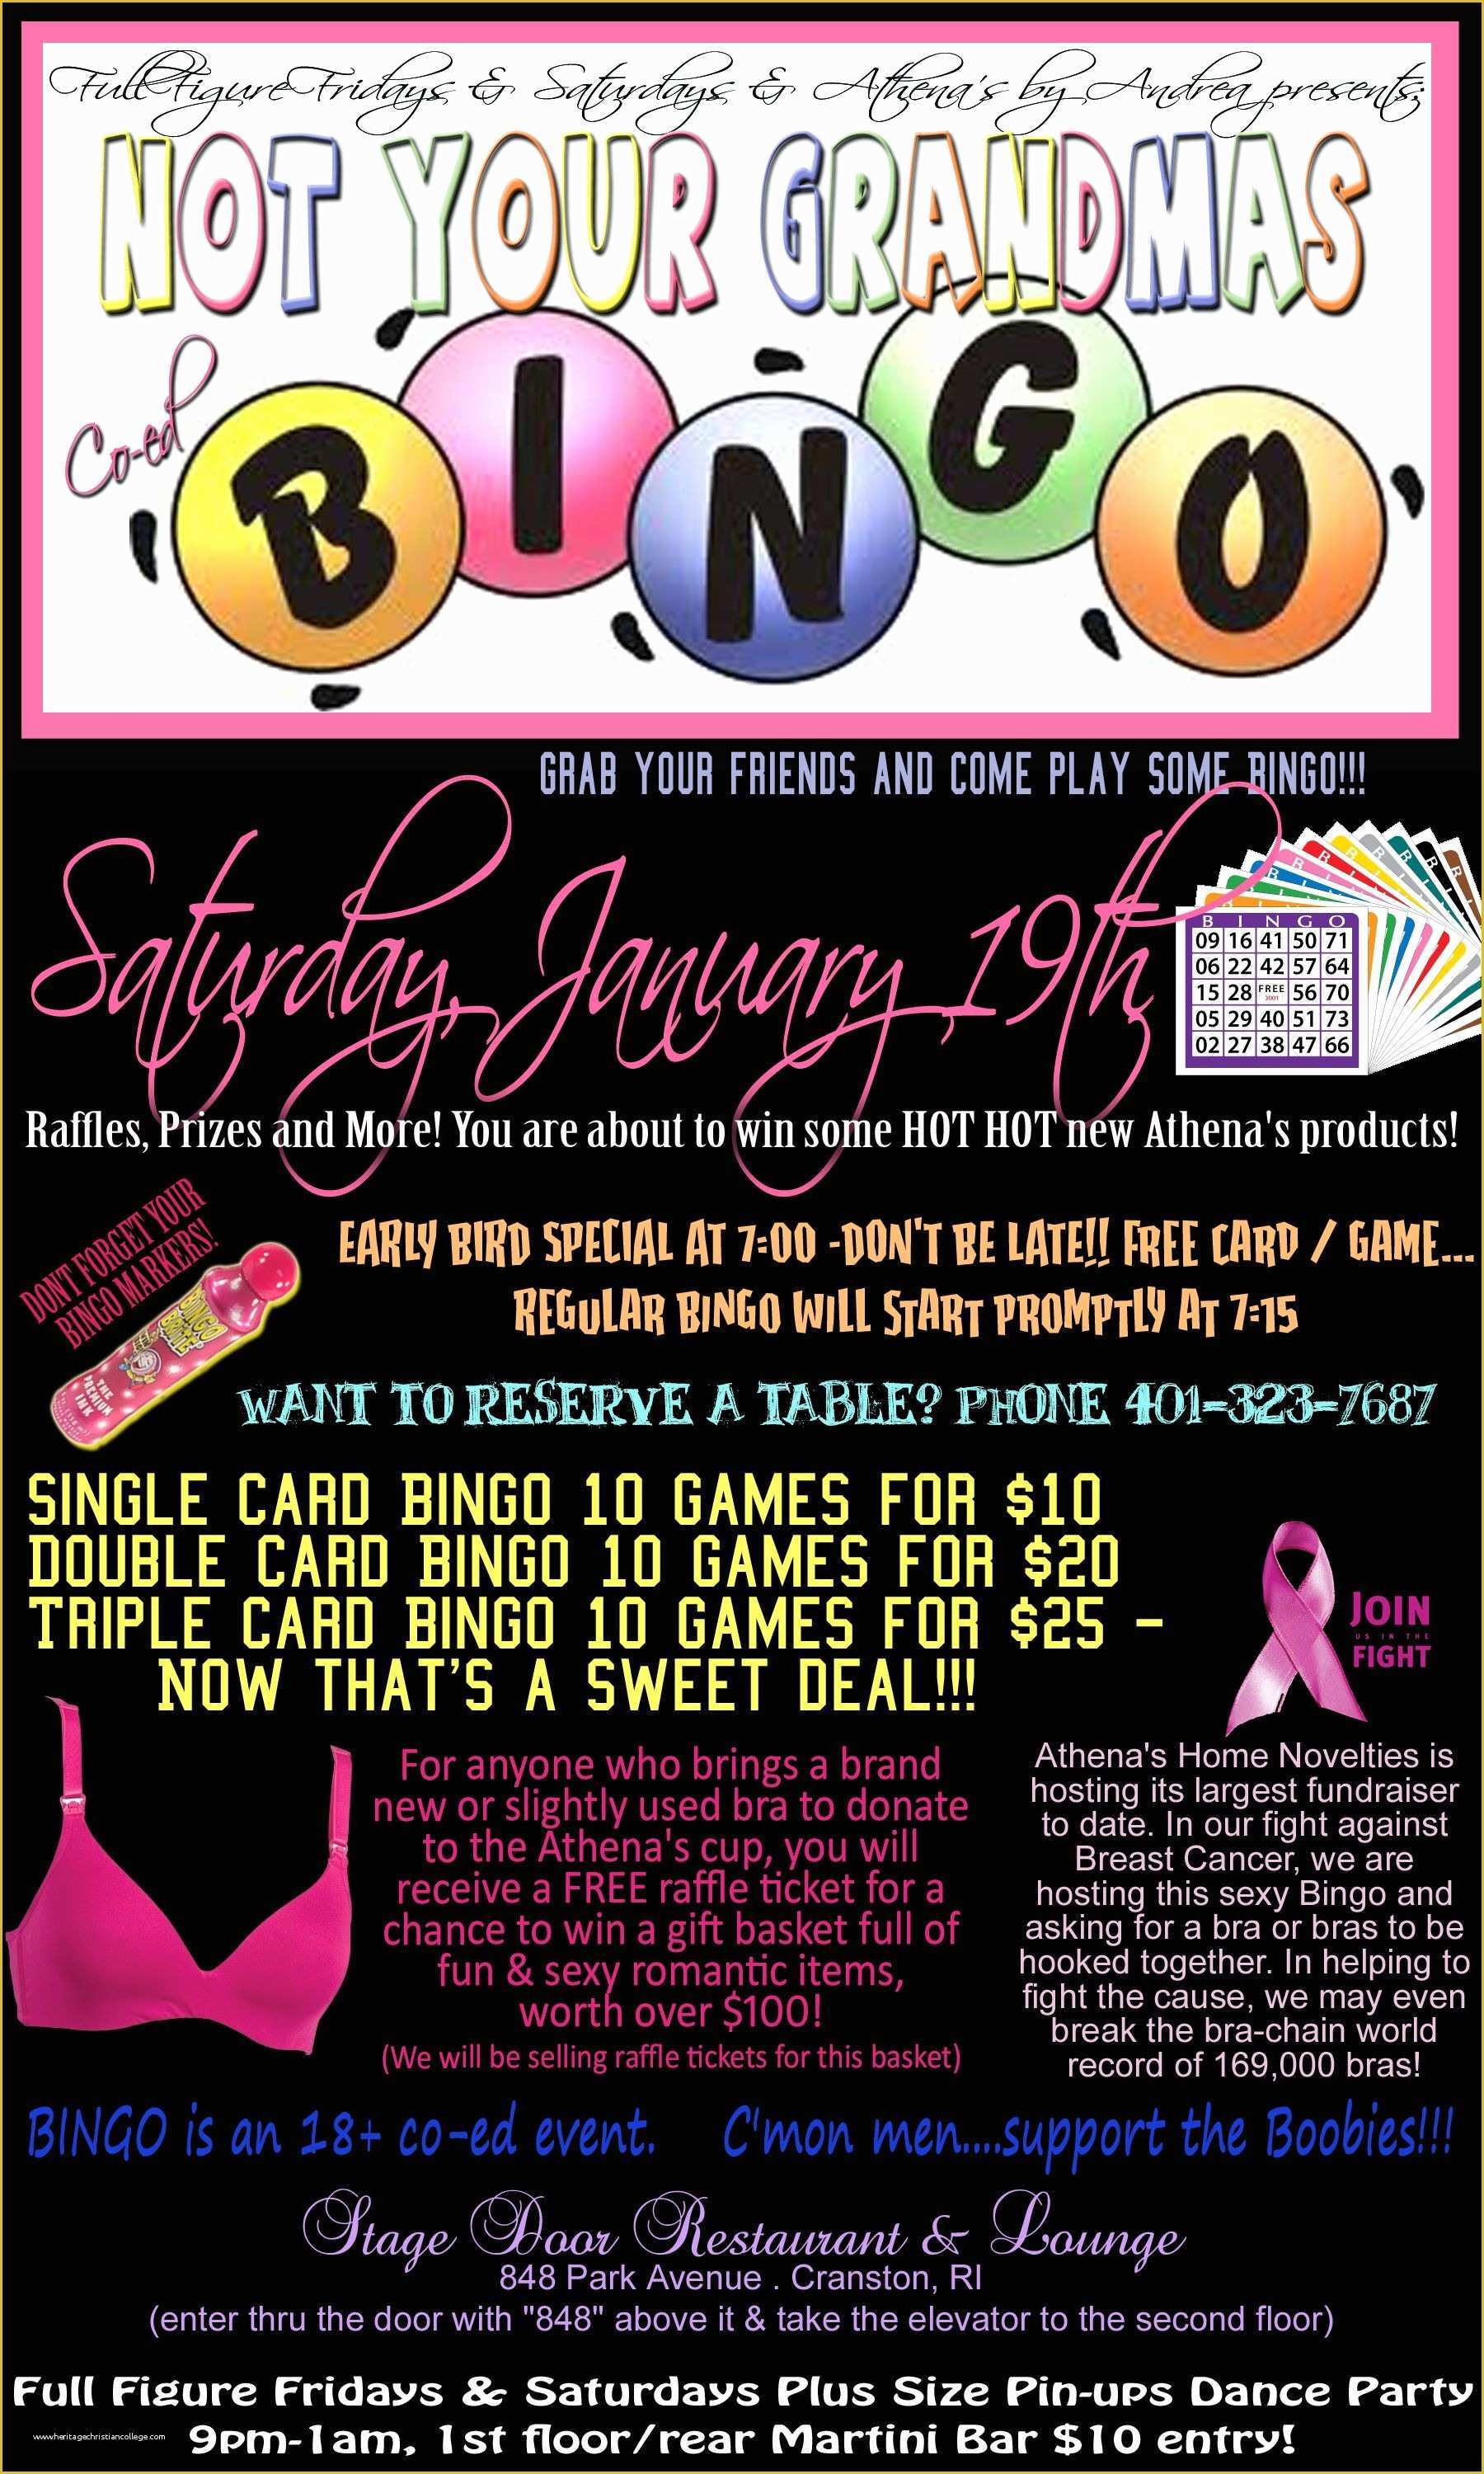 Free Bingo Night Flyer Template Of Not Your Grandmas Bingo Adult toy Bingo Saturday